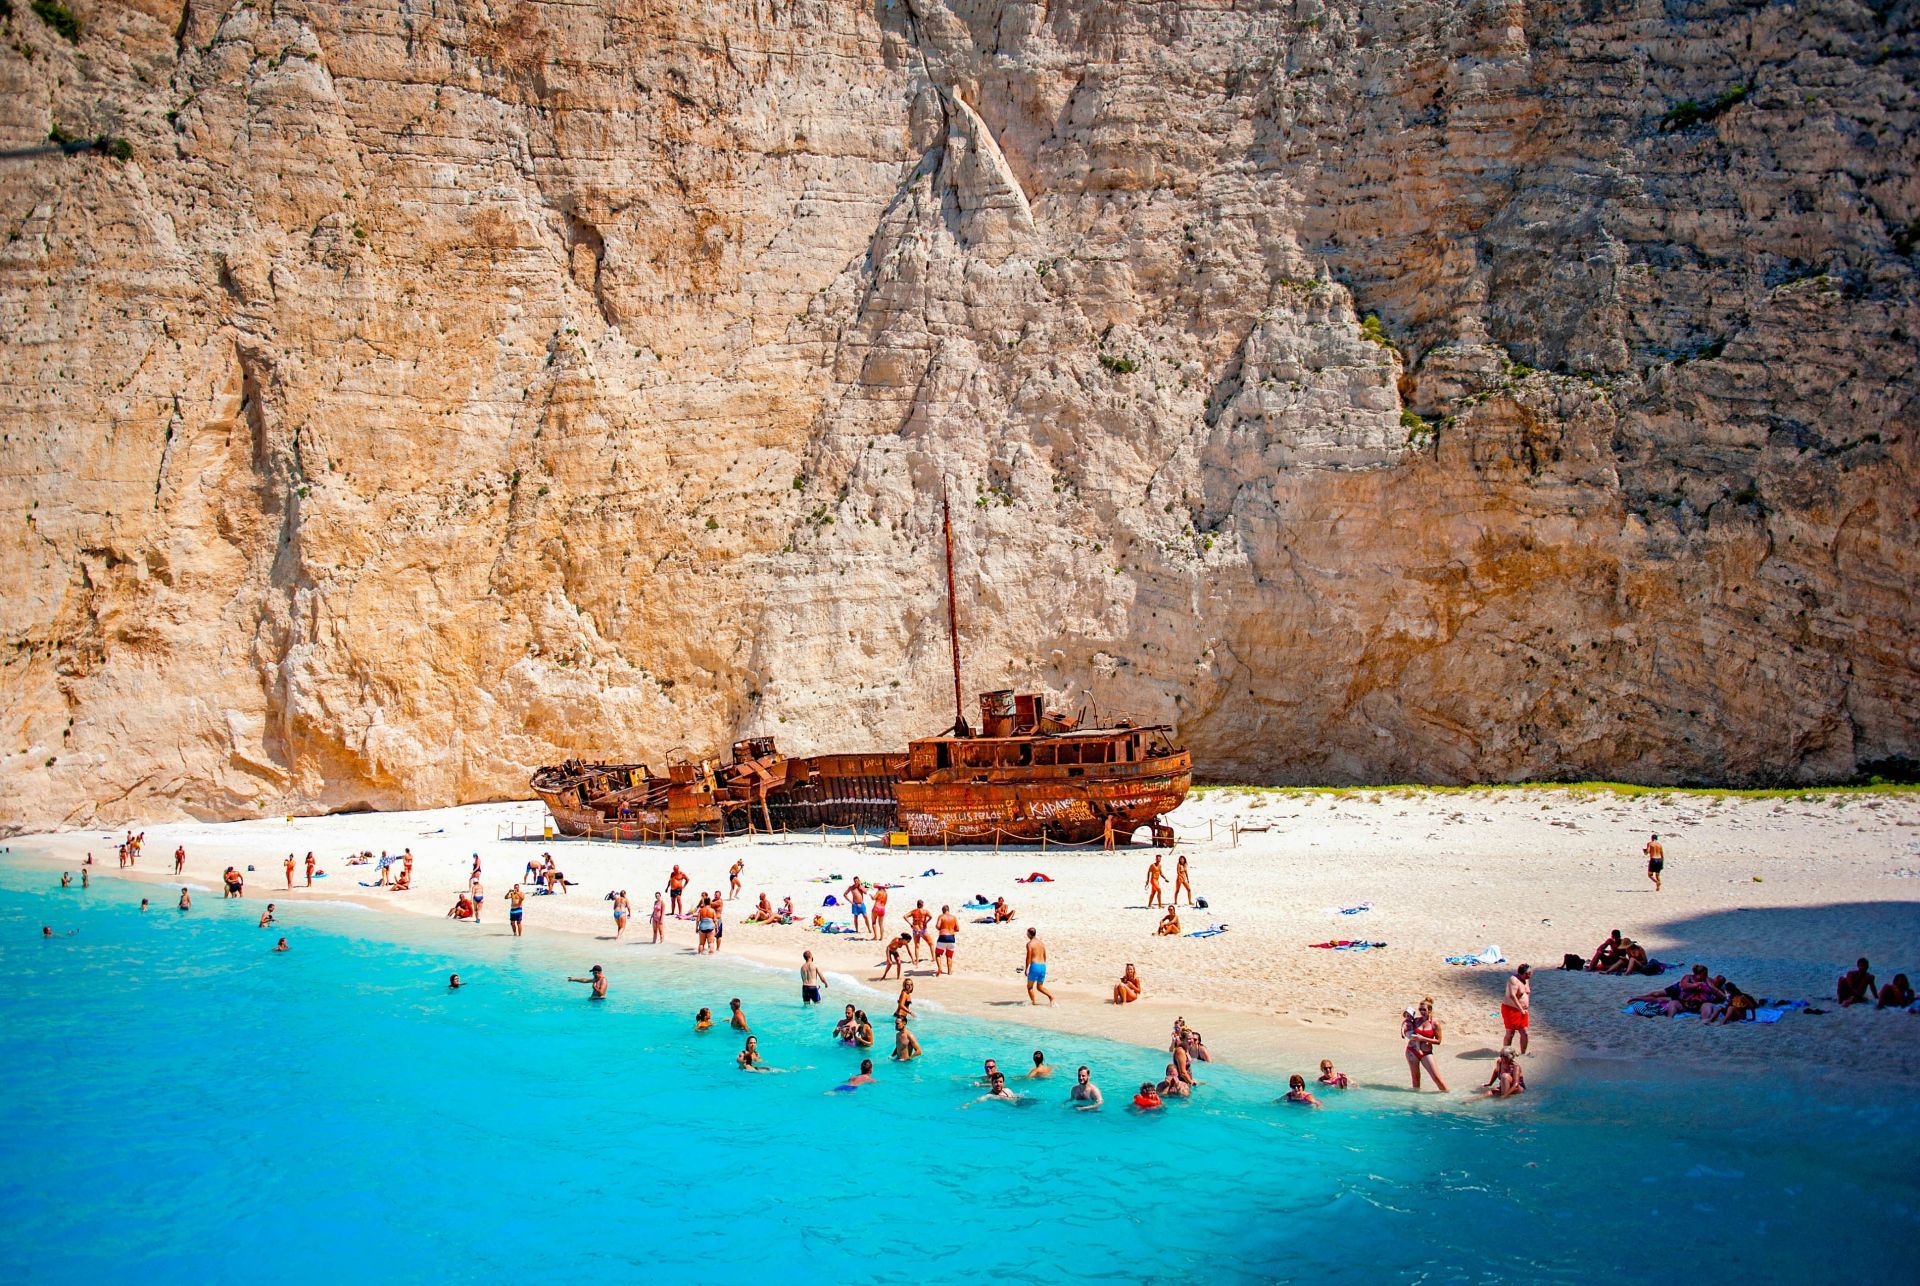 Zakynthos Cruise To Shipwreck And Blue Caves Greeka